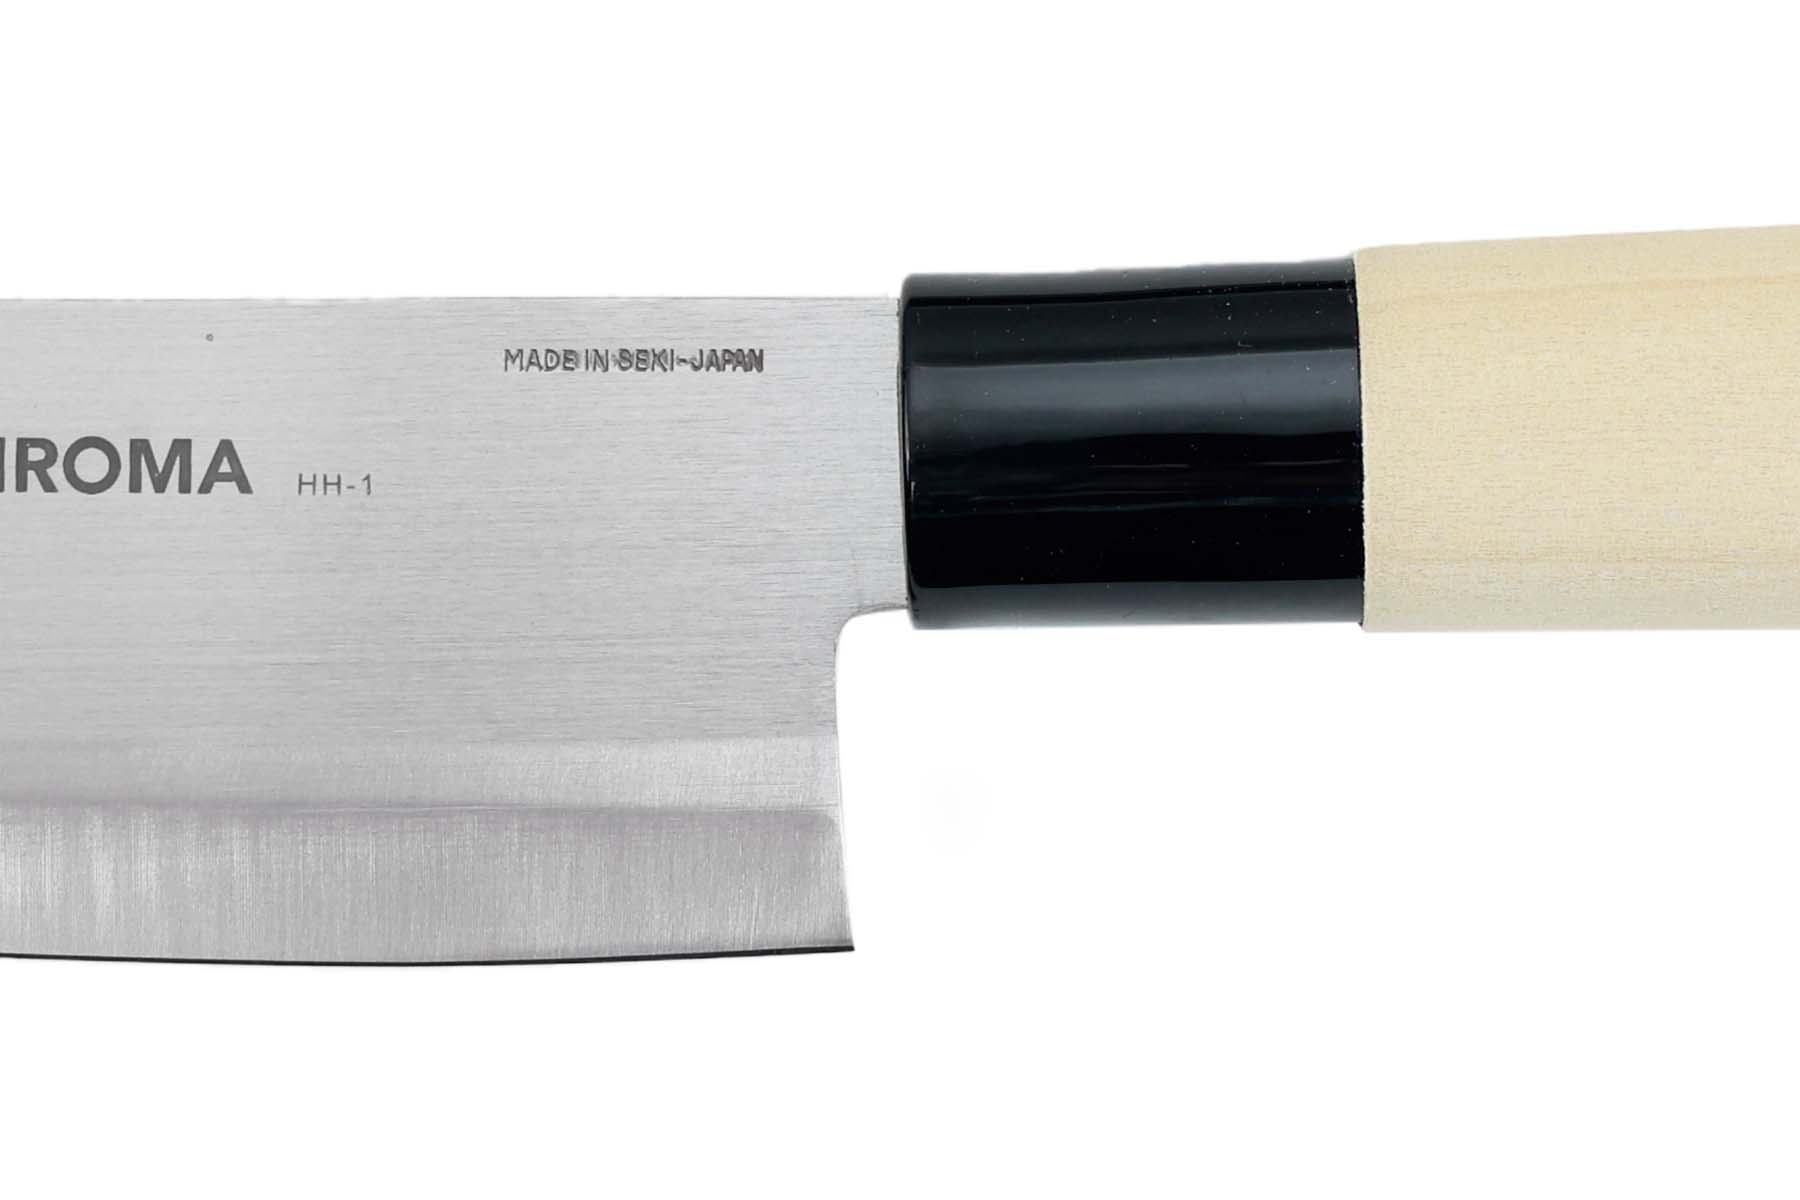 Couteau japonais Haiku Home de Chroma - Couteau santoku 17,5 cm